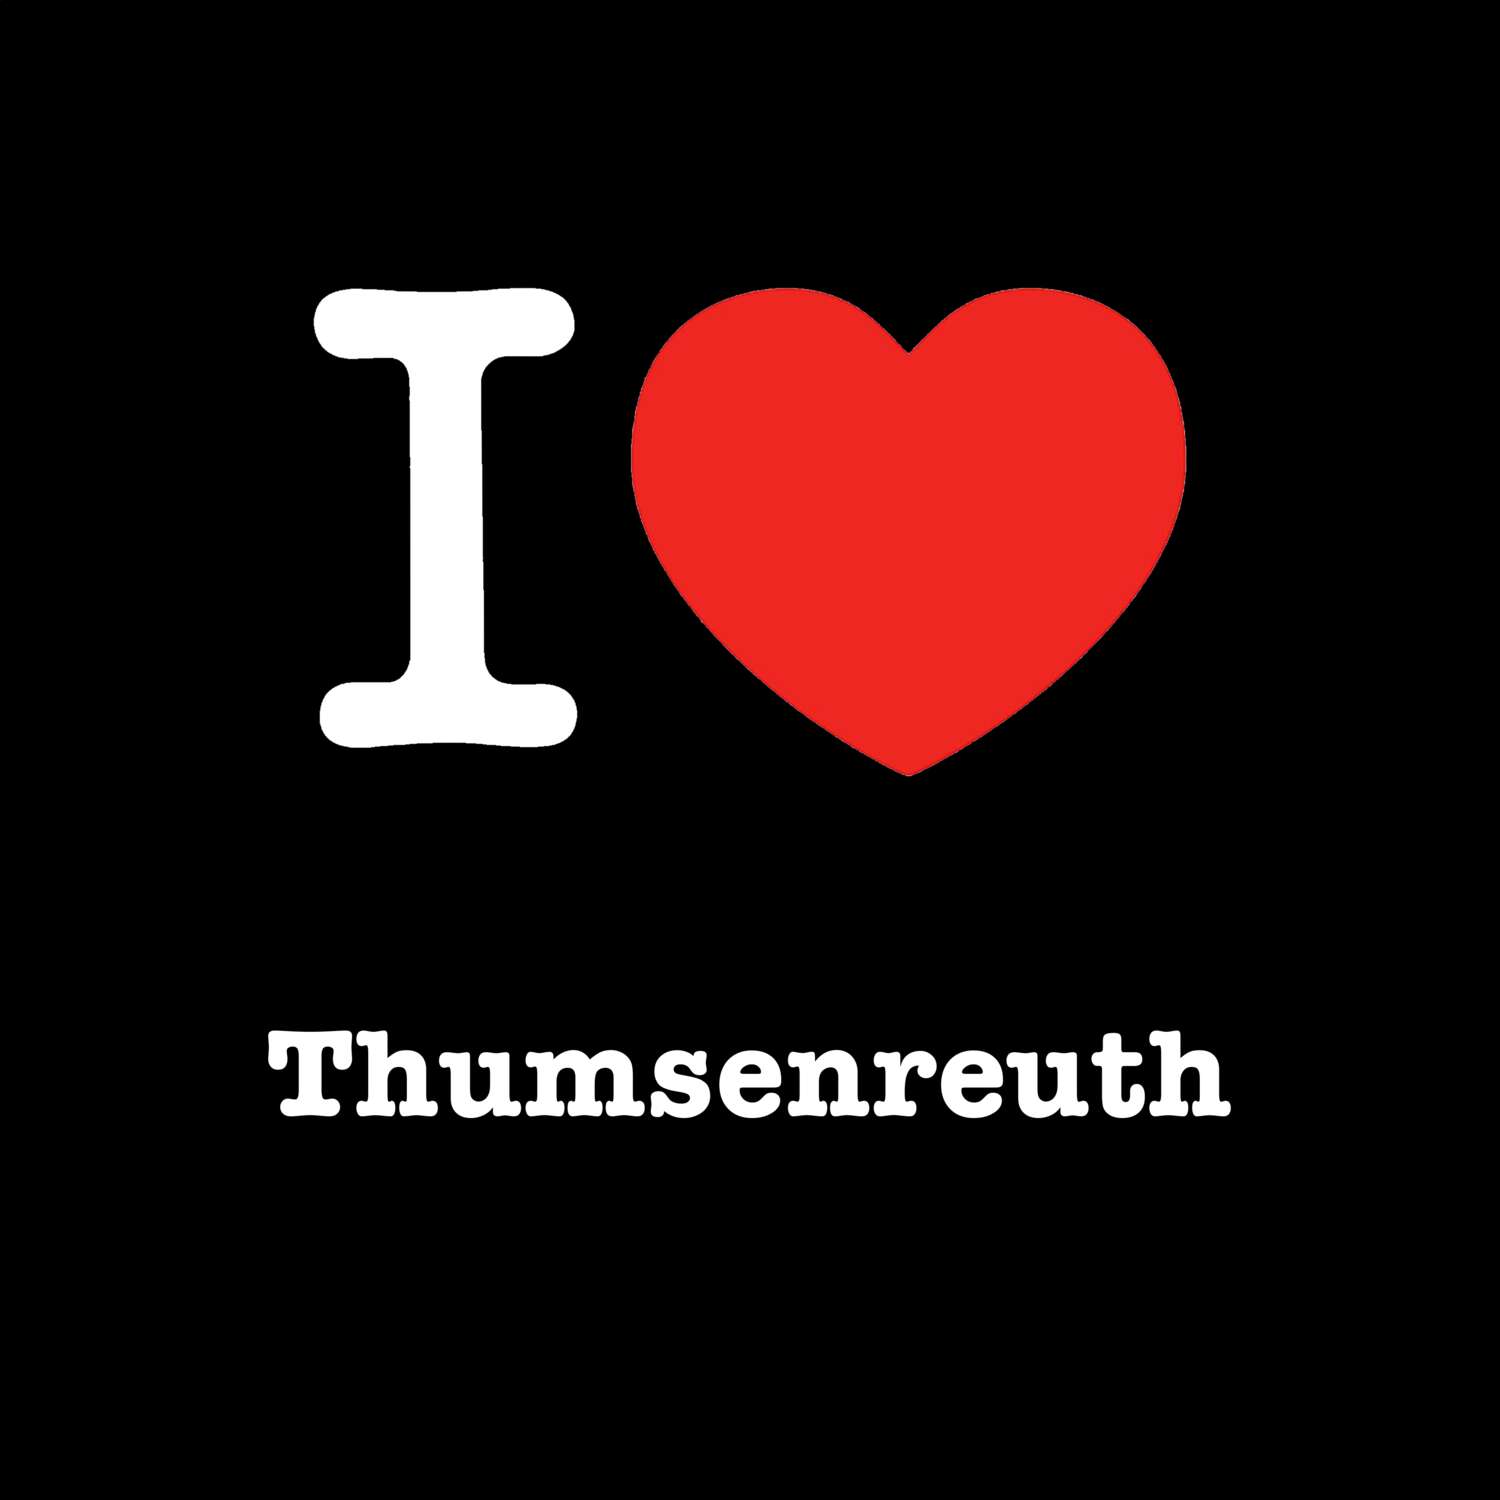 Thumsenreuth T-Shirt »I love«